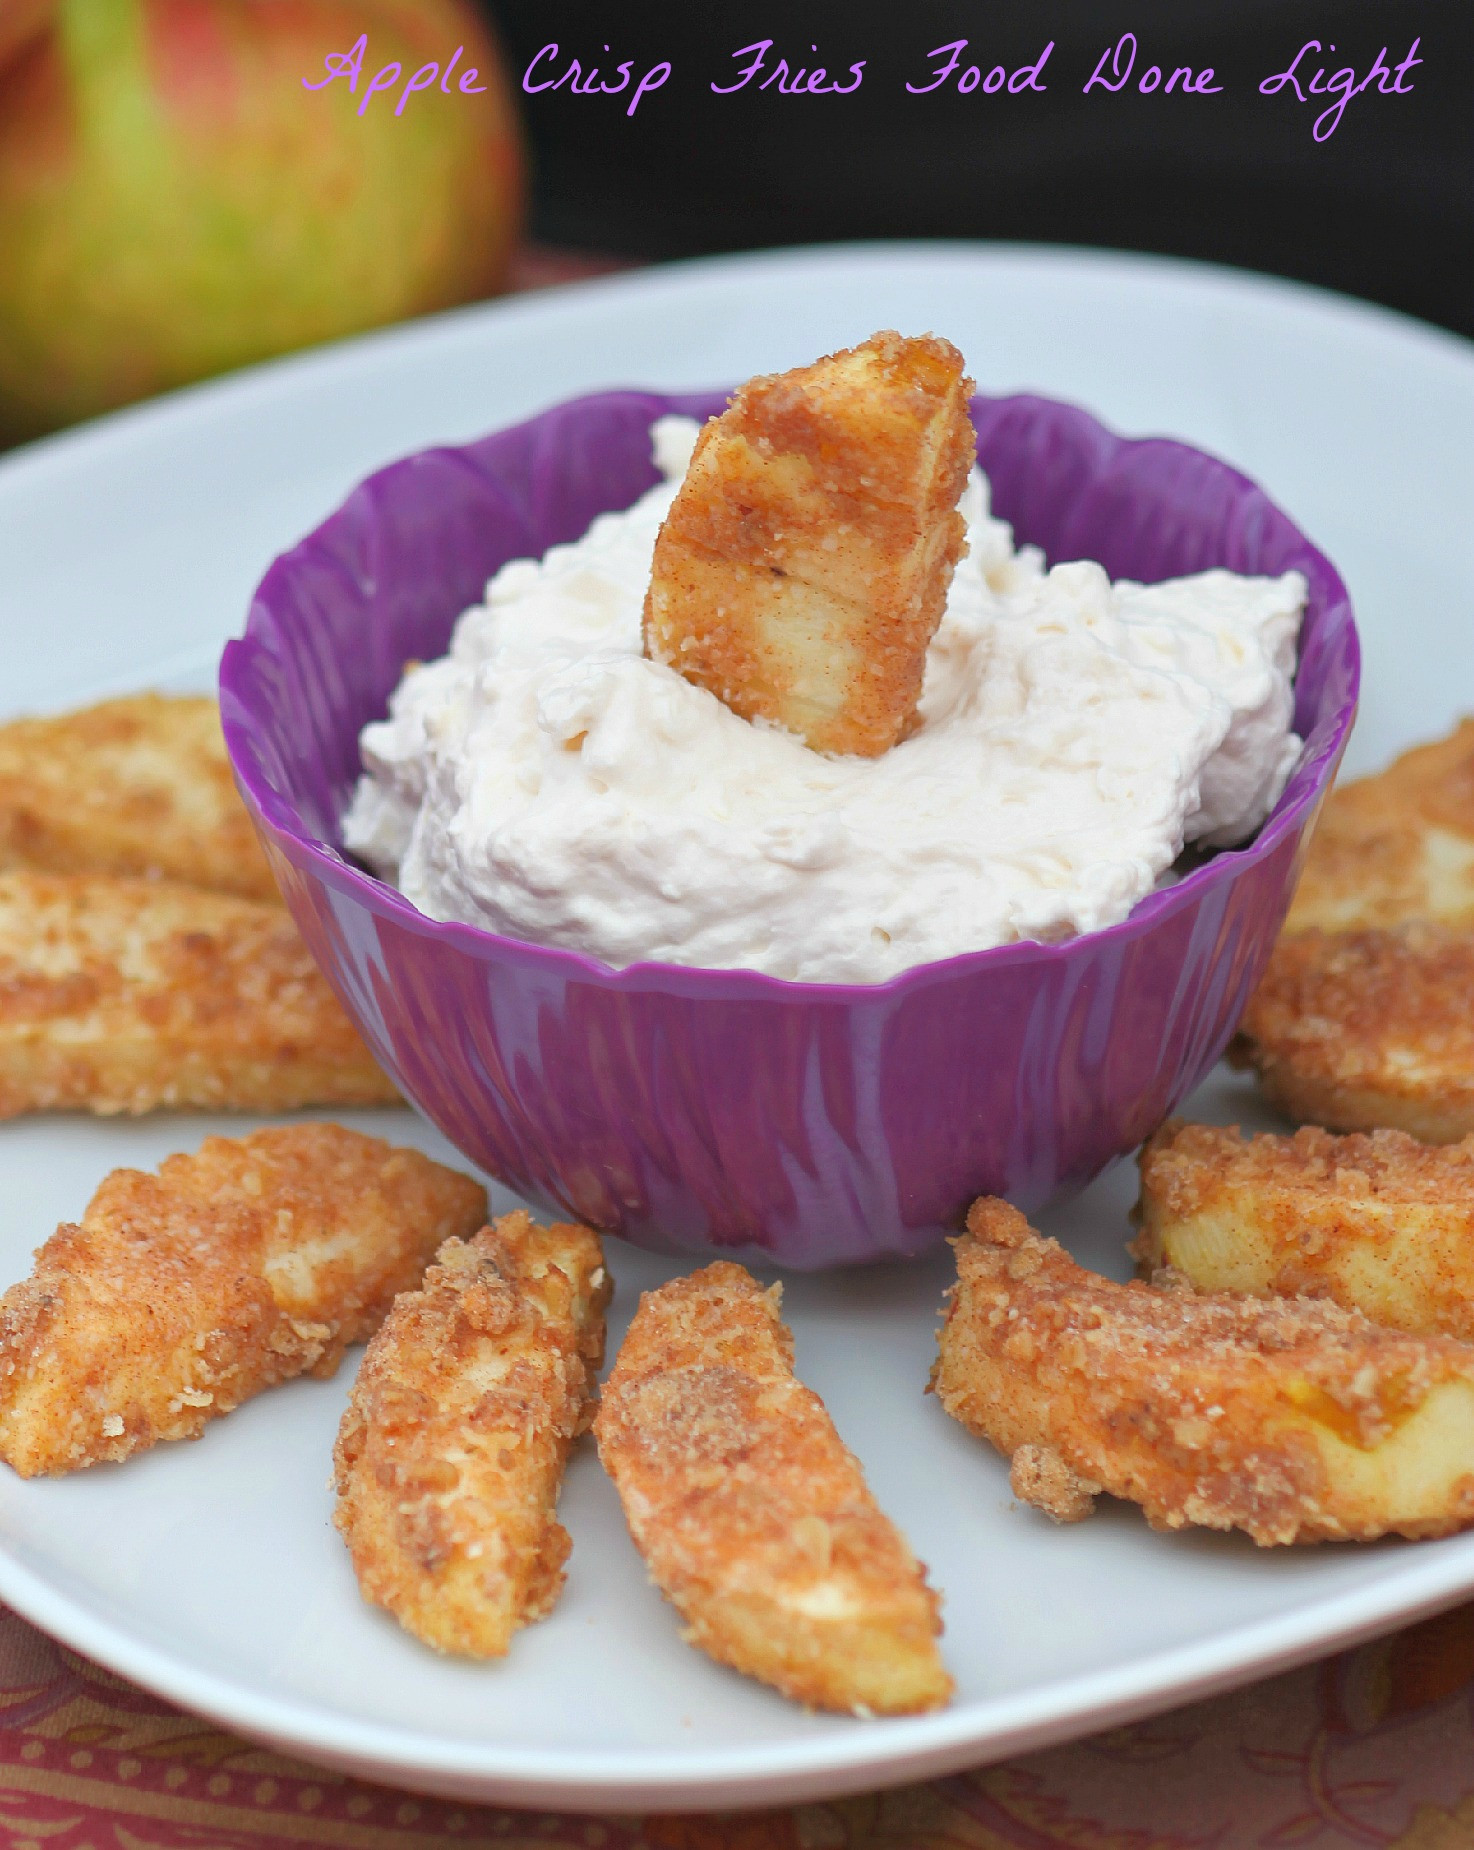 Healthy Apple Dessert Recipes
 Apple Crisp Fries Healthy Low Calorie Food Done Light